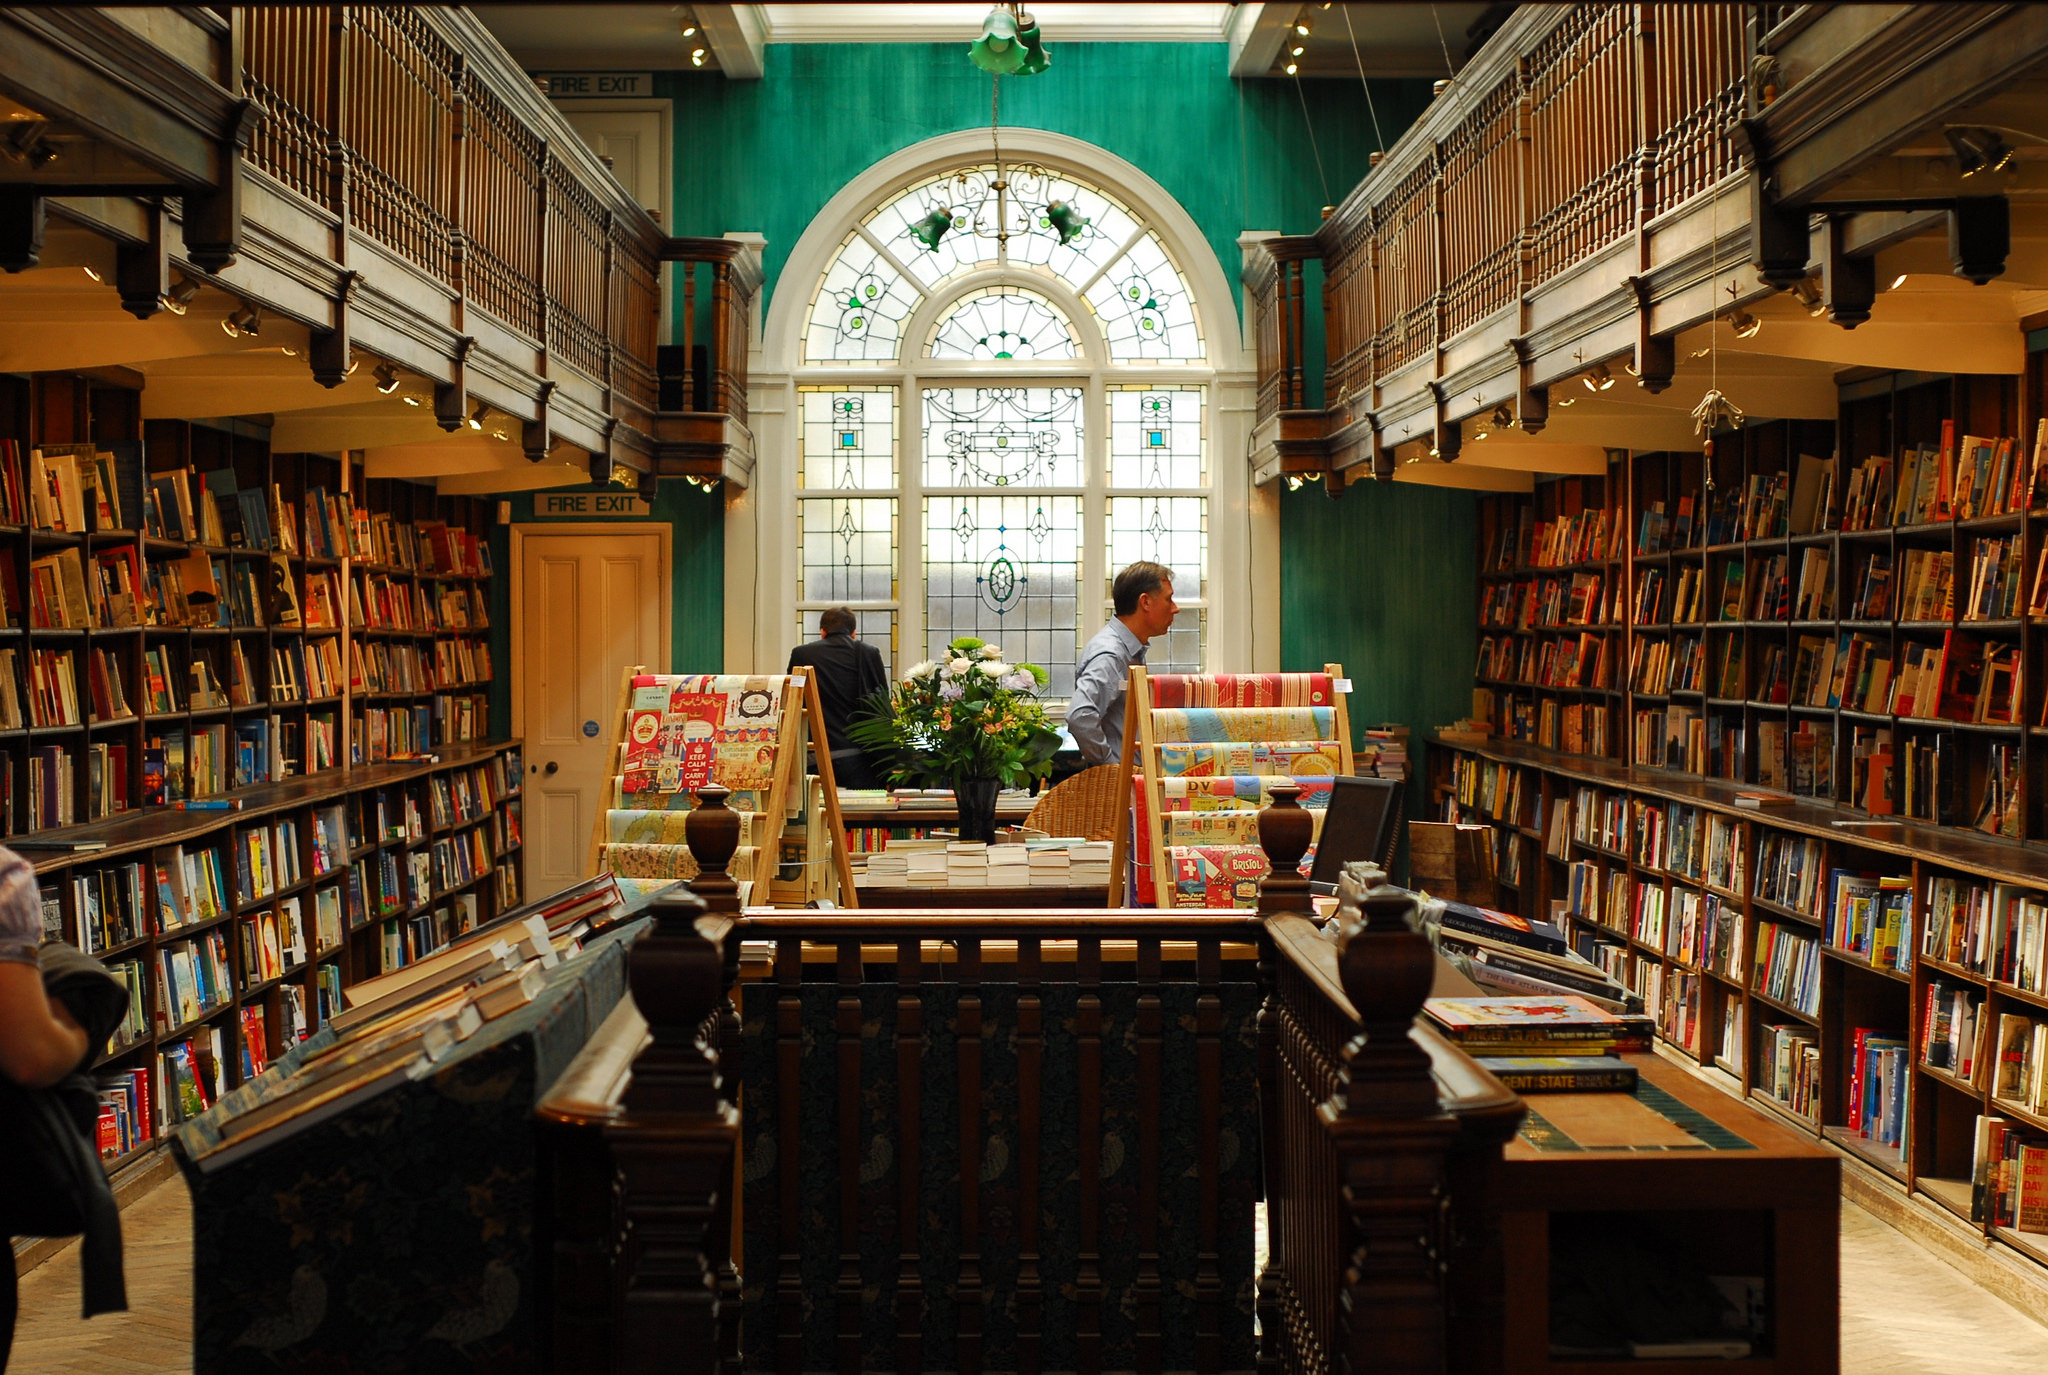 Best books shop. Библиотека мечты. Книжный магазин в Лондоне. Daunt books London. The last Bookshop in London.